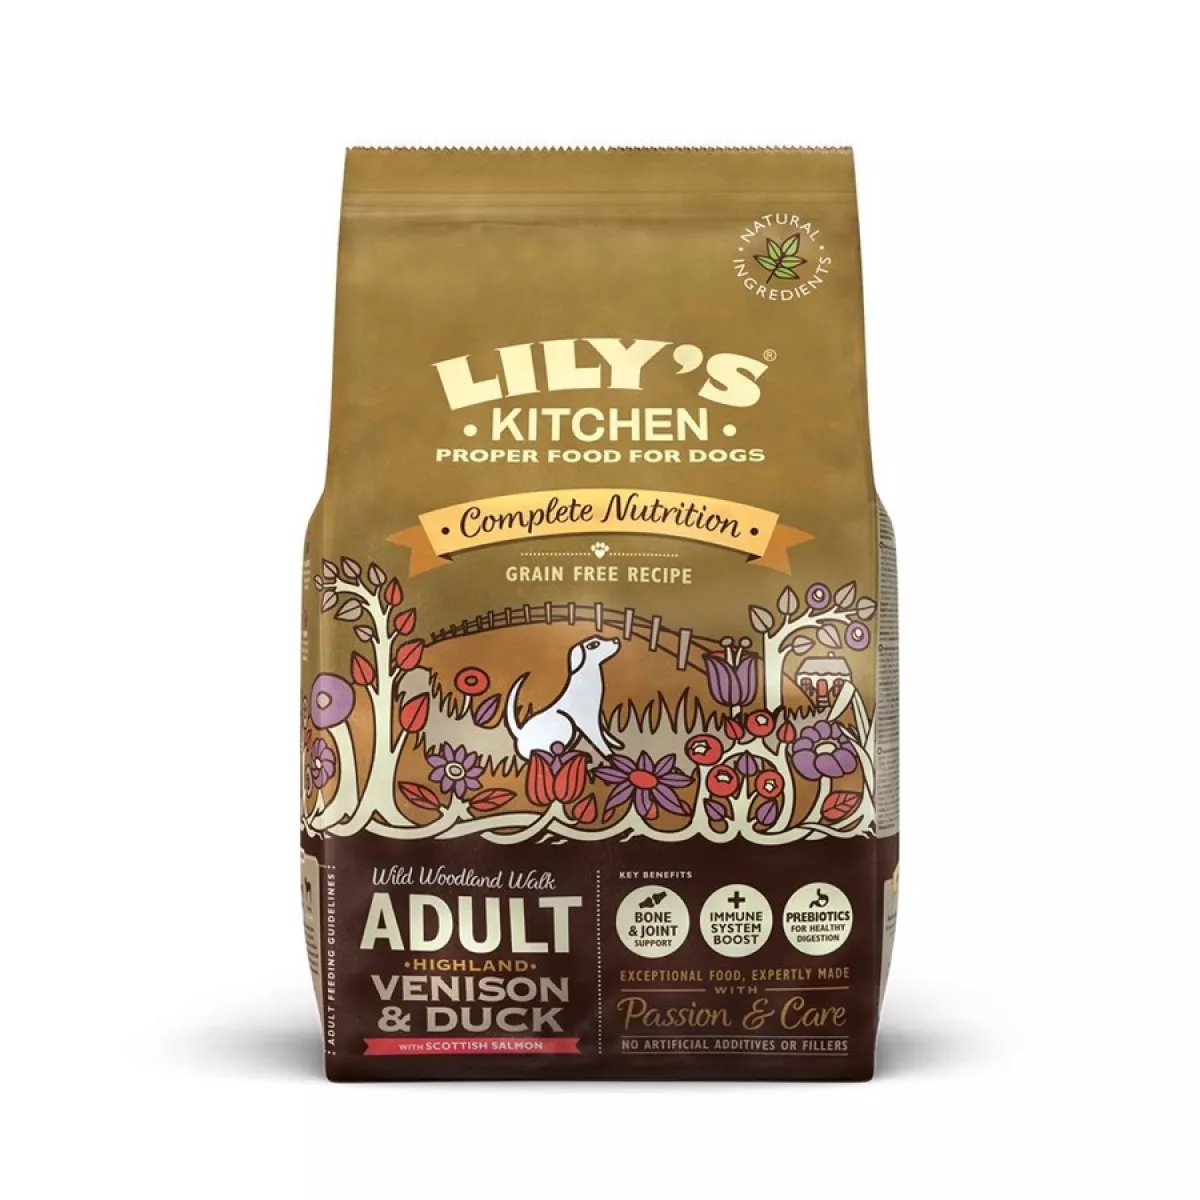 #2 - Lilys Kitchen tørfoder Adult Venison & Duck, 2.5 kg